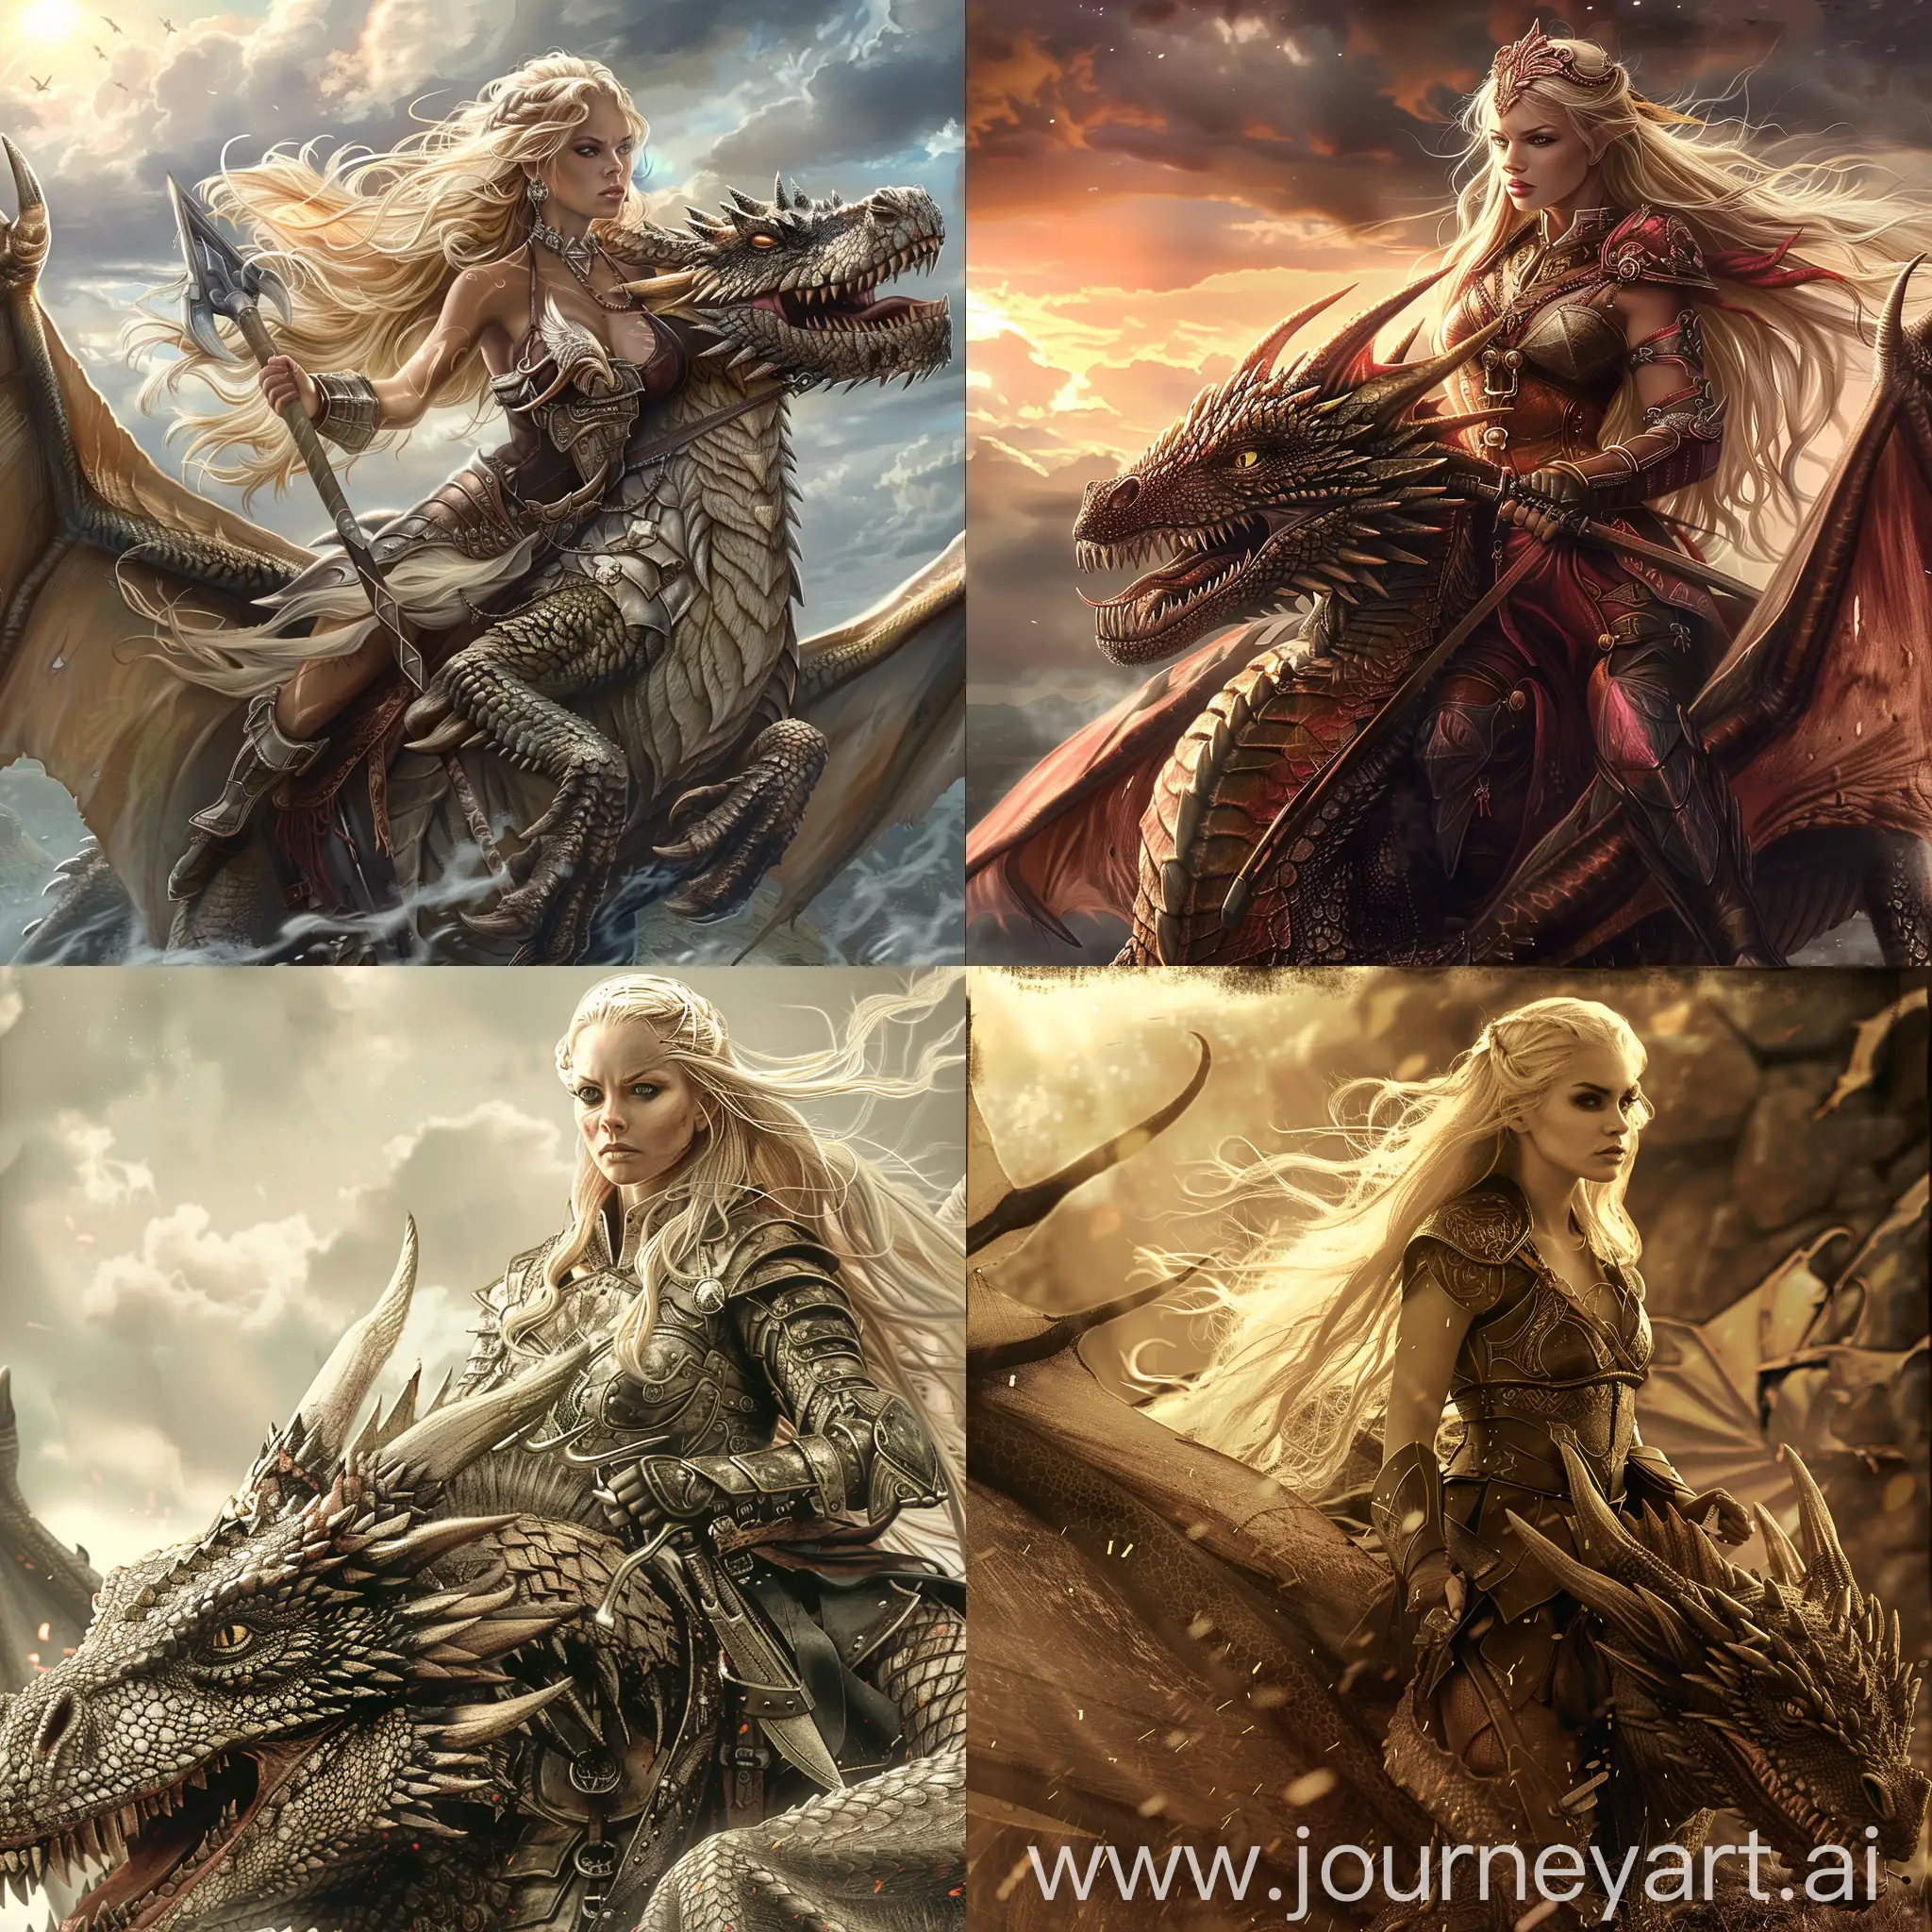 Blonde-Warrior-Maiden-Riding-Dragon-Majestic-Fantasy-Scene